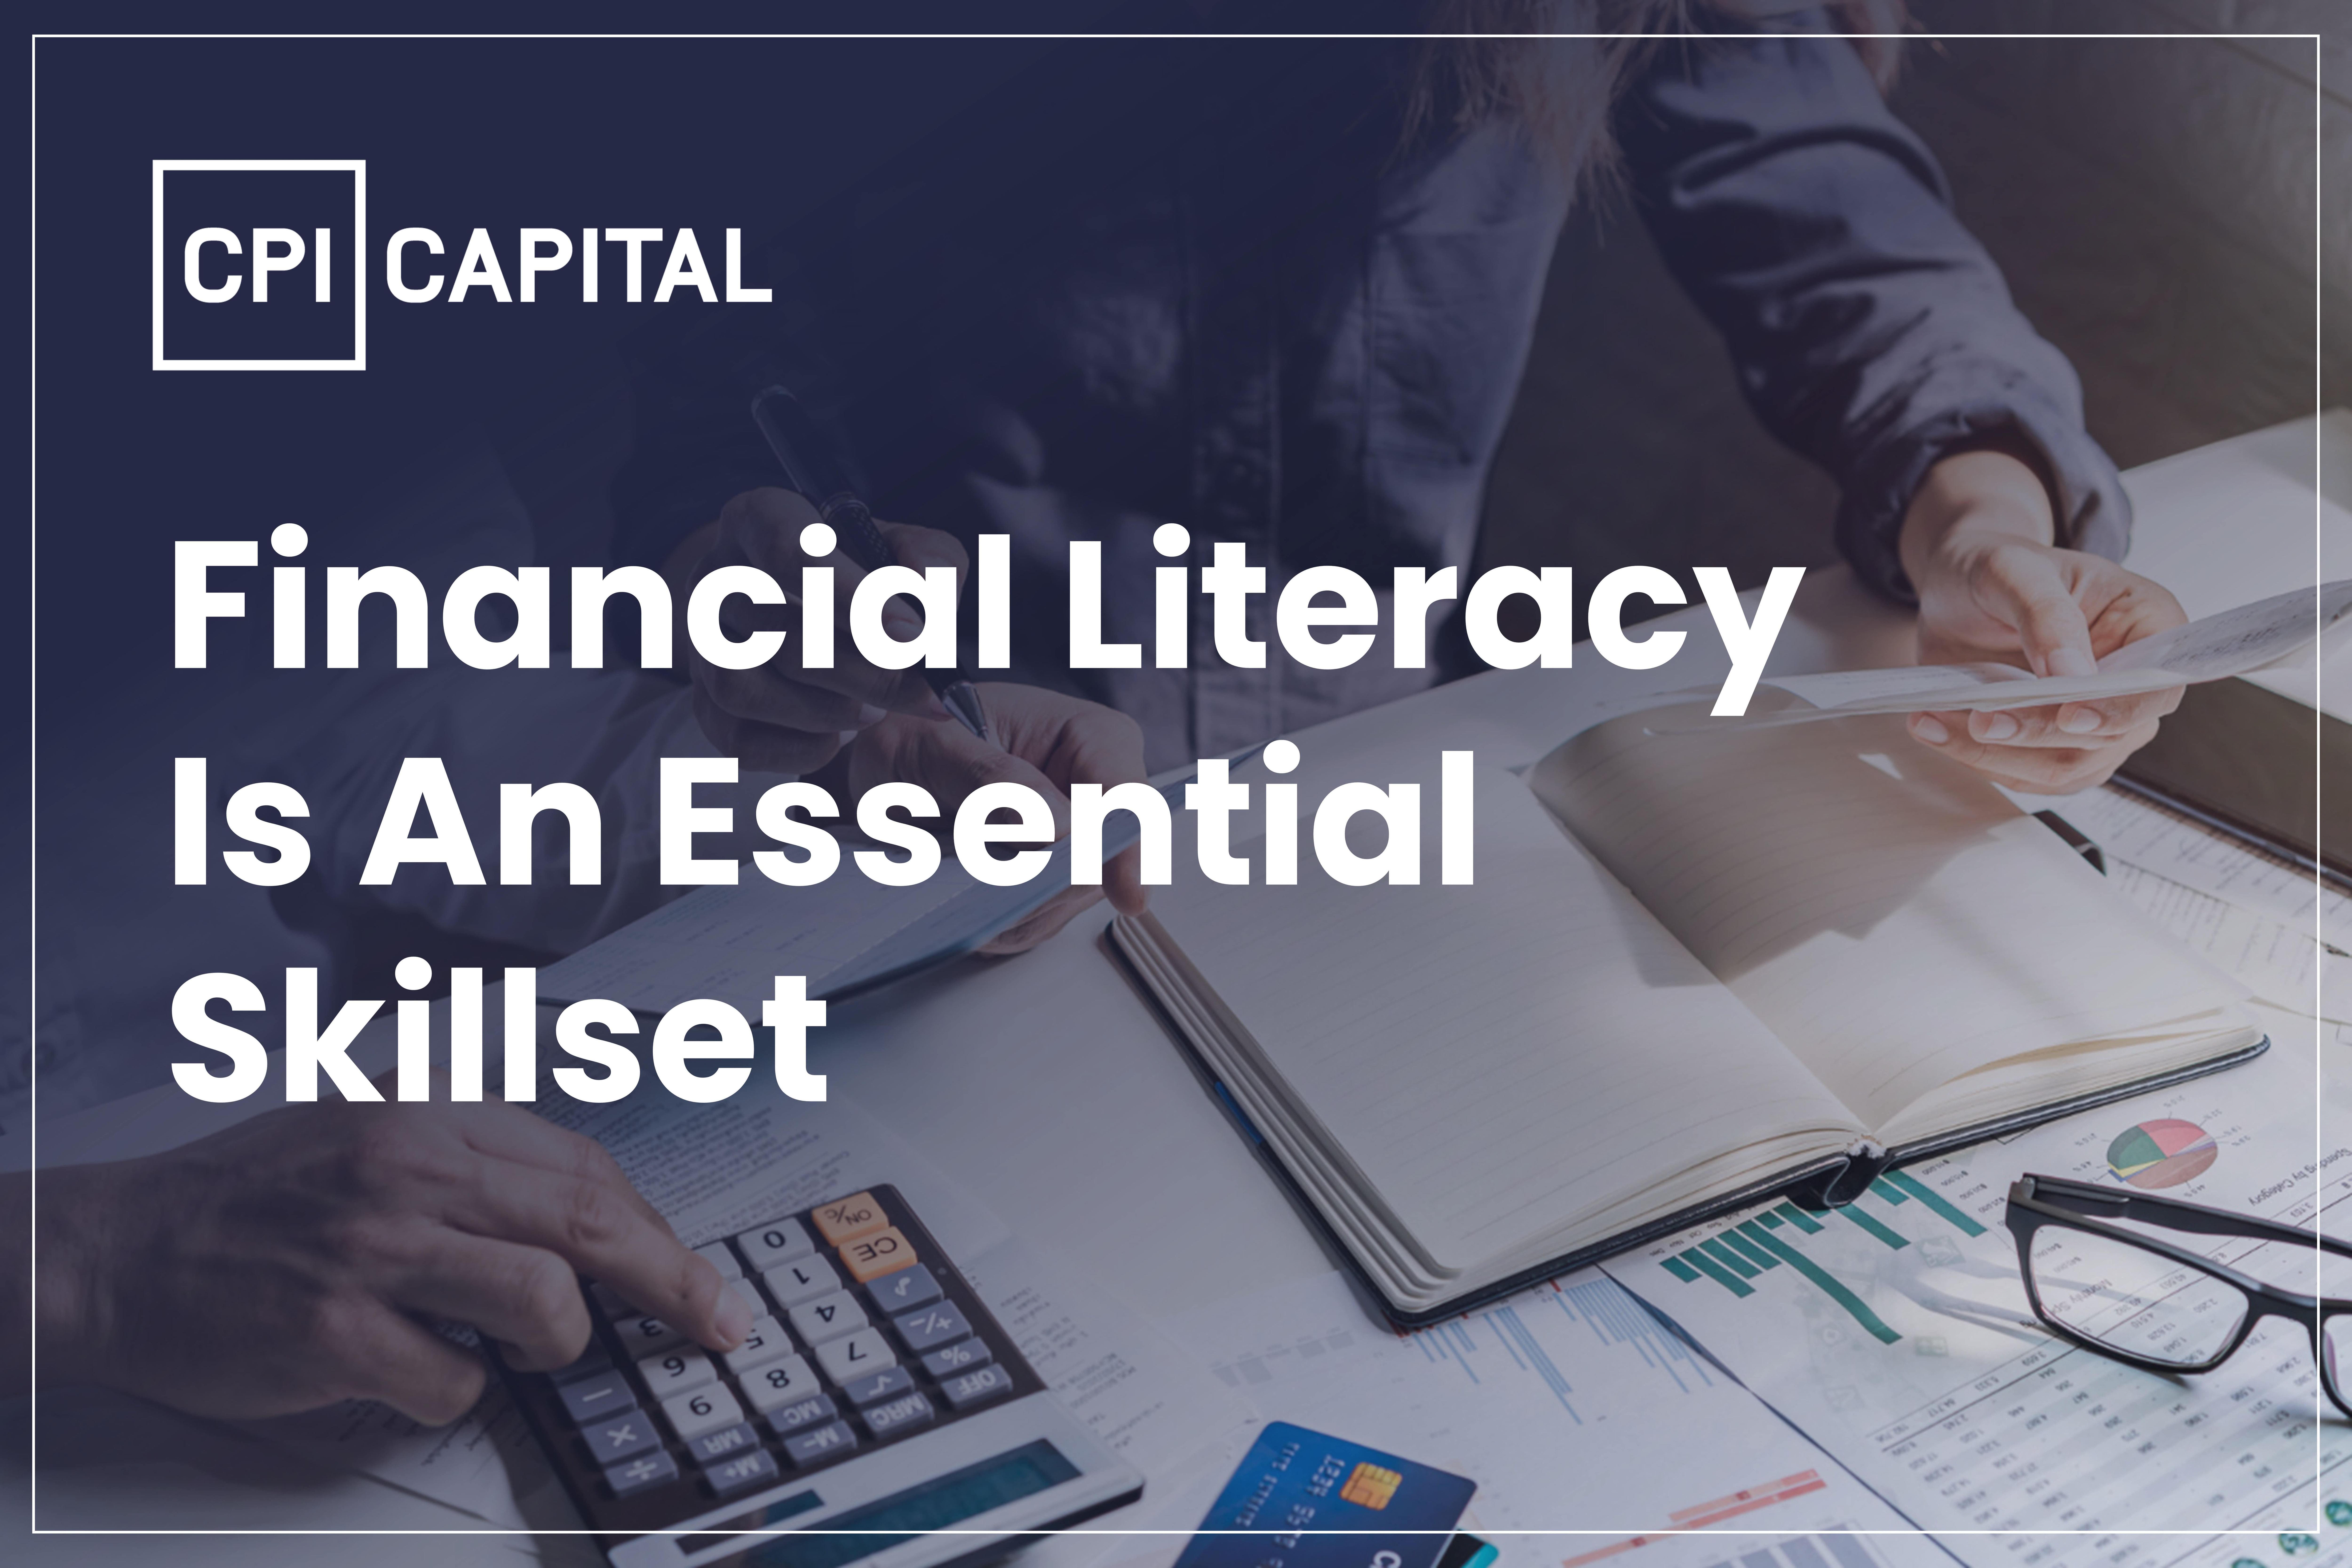 CPI capital_Financial Literacy Is An Essential Skillset